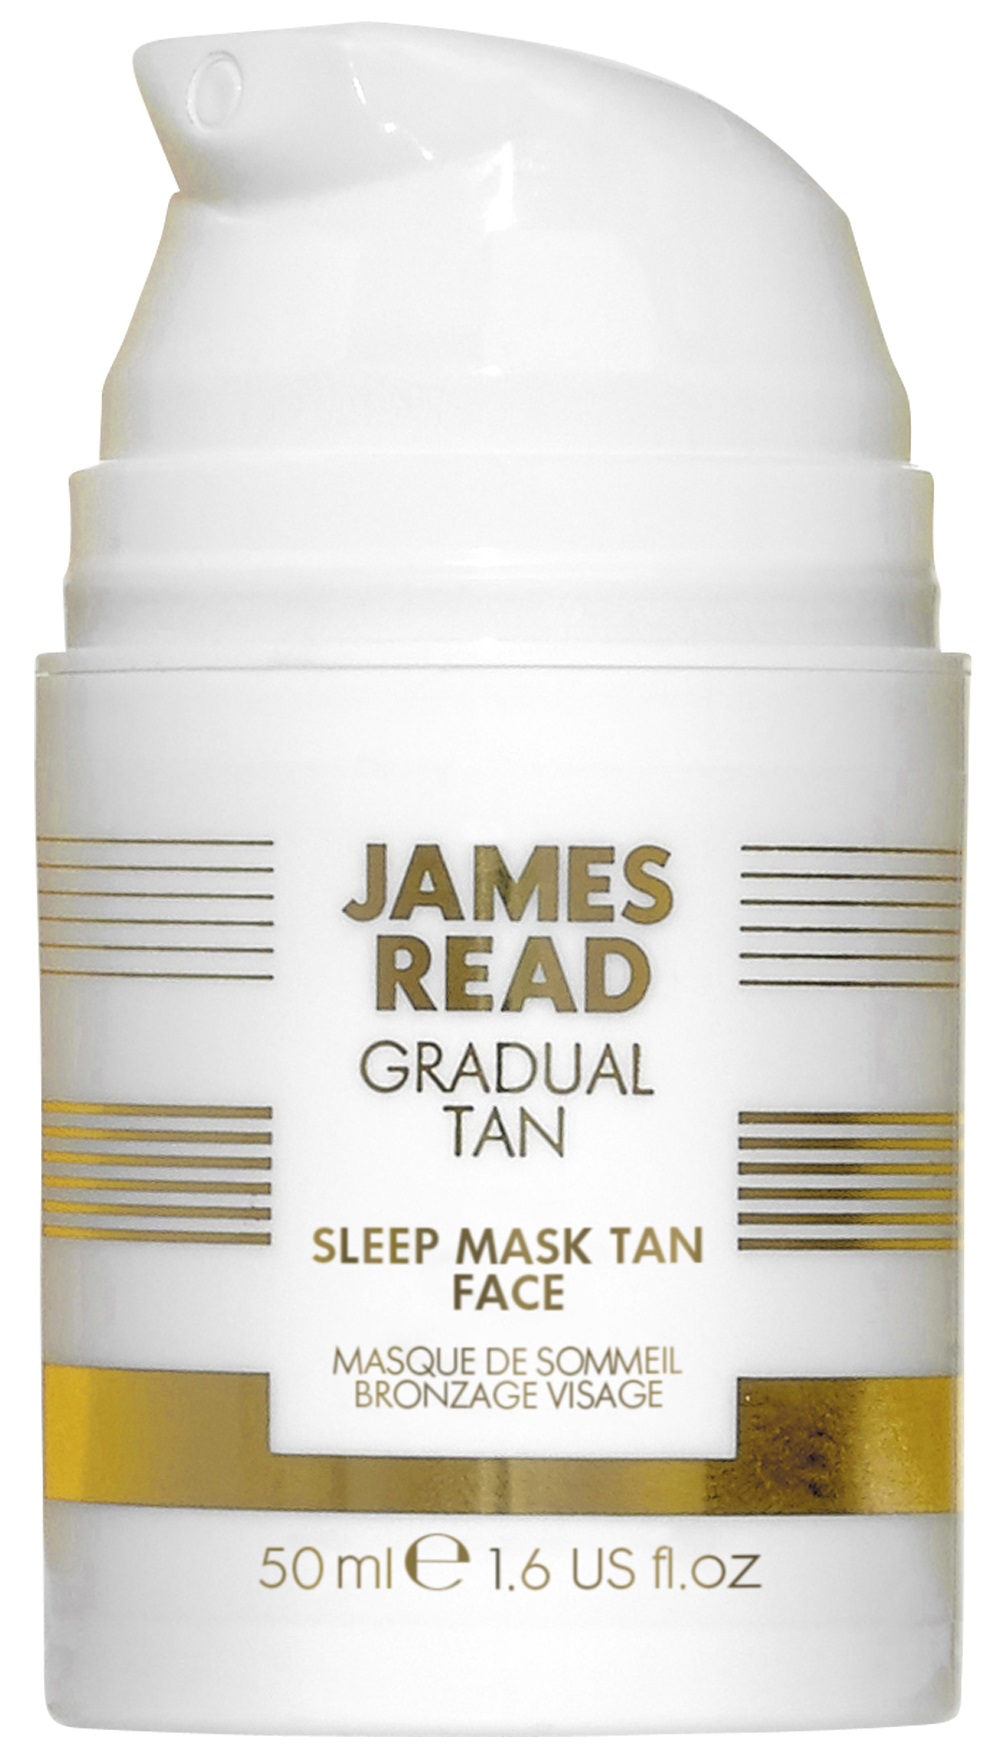 James Read Gradual Day Tan Face SPF15